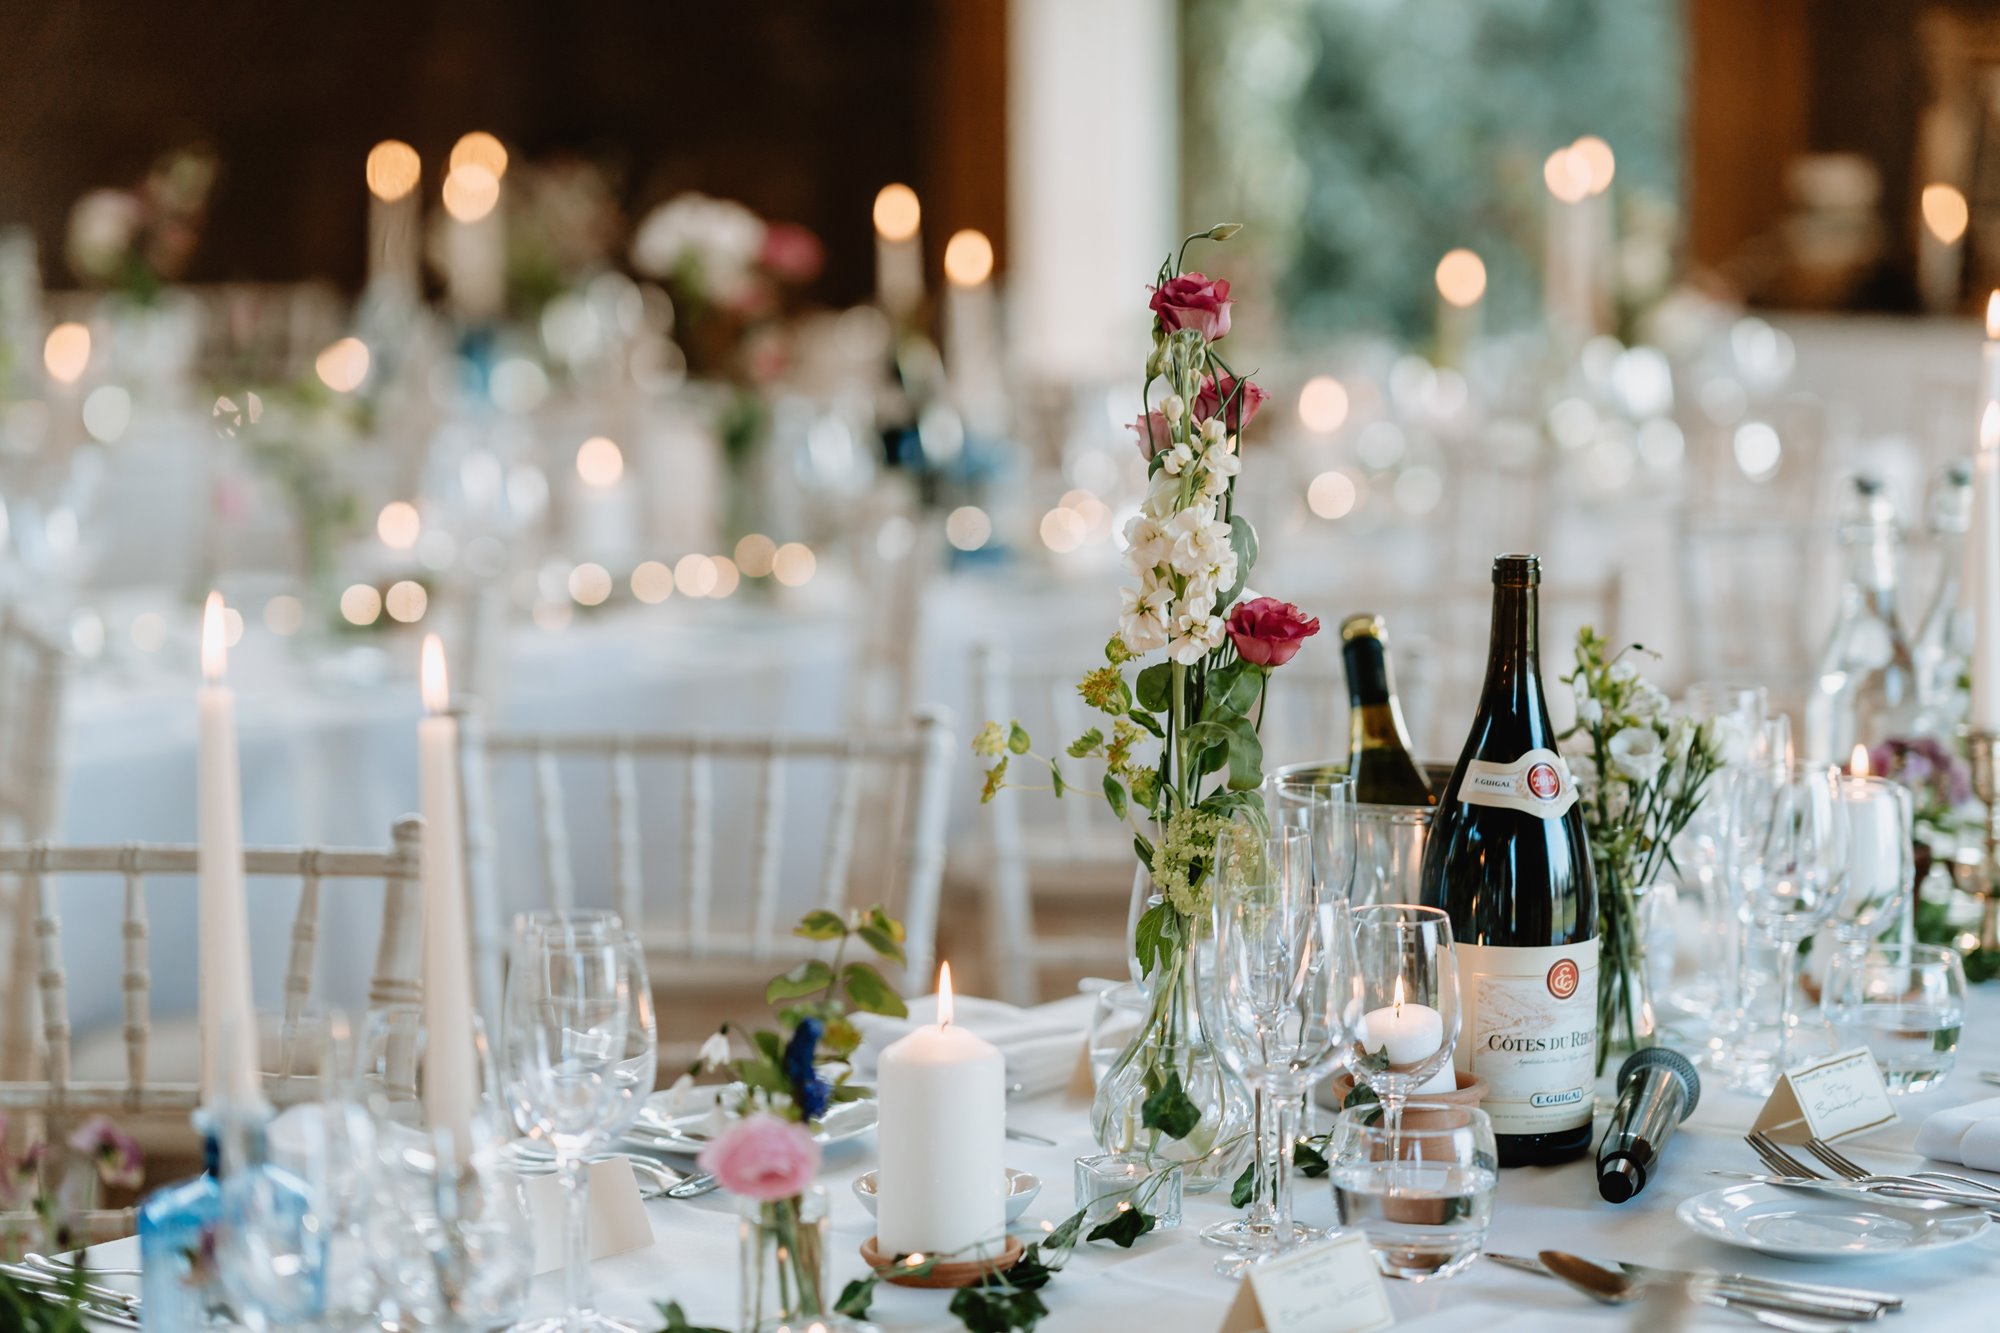 elegantly decorated white wedding reception tables